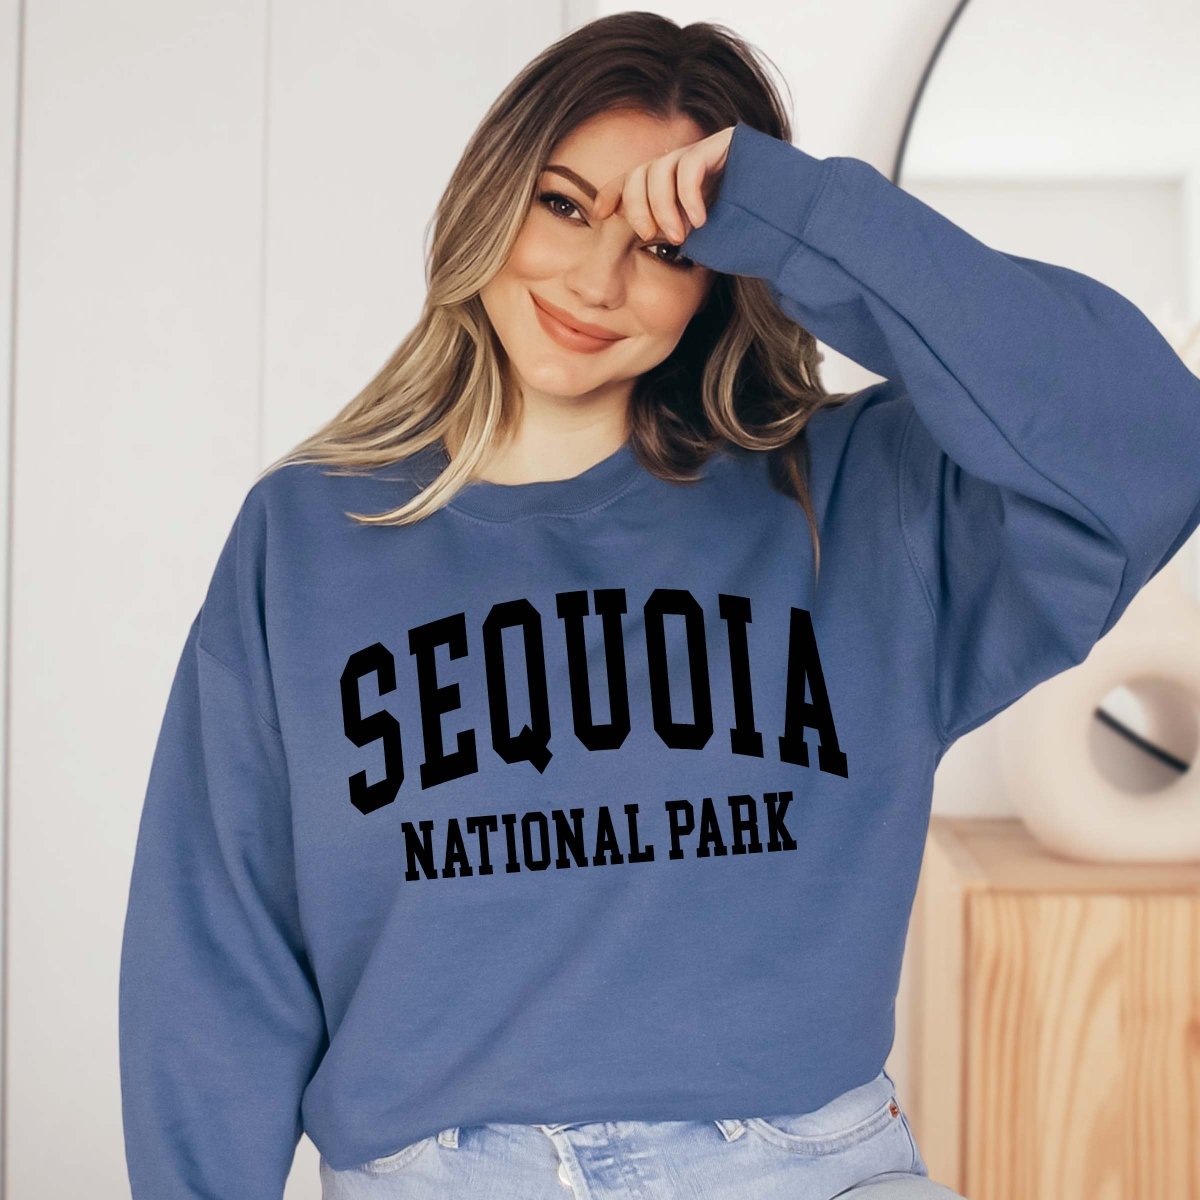 Sequoia National Park Crew Sweatshirt - Limeberry Designs